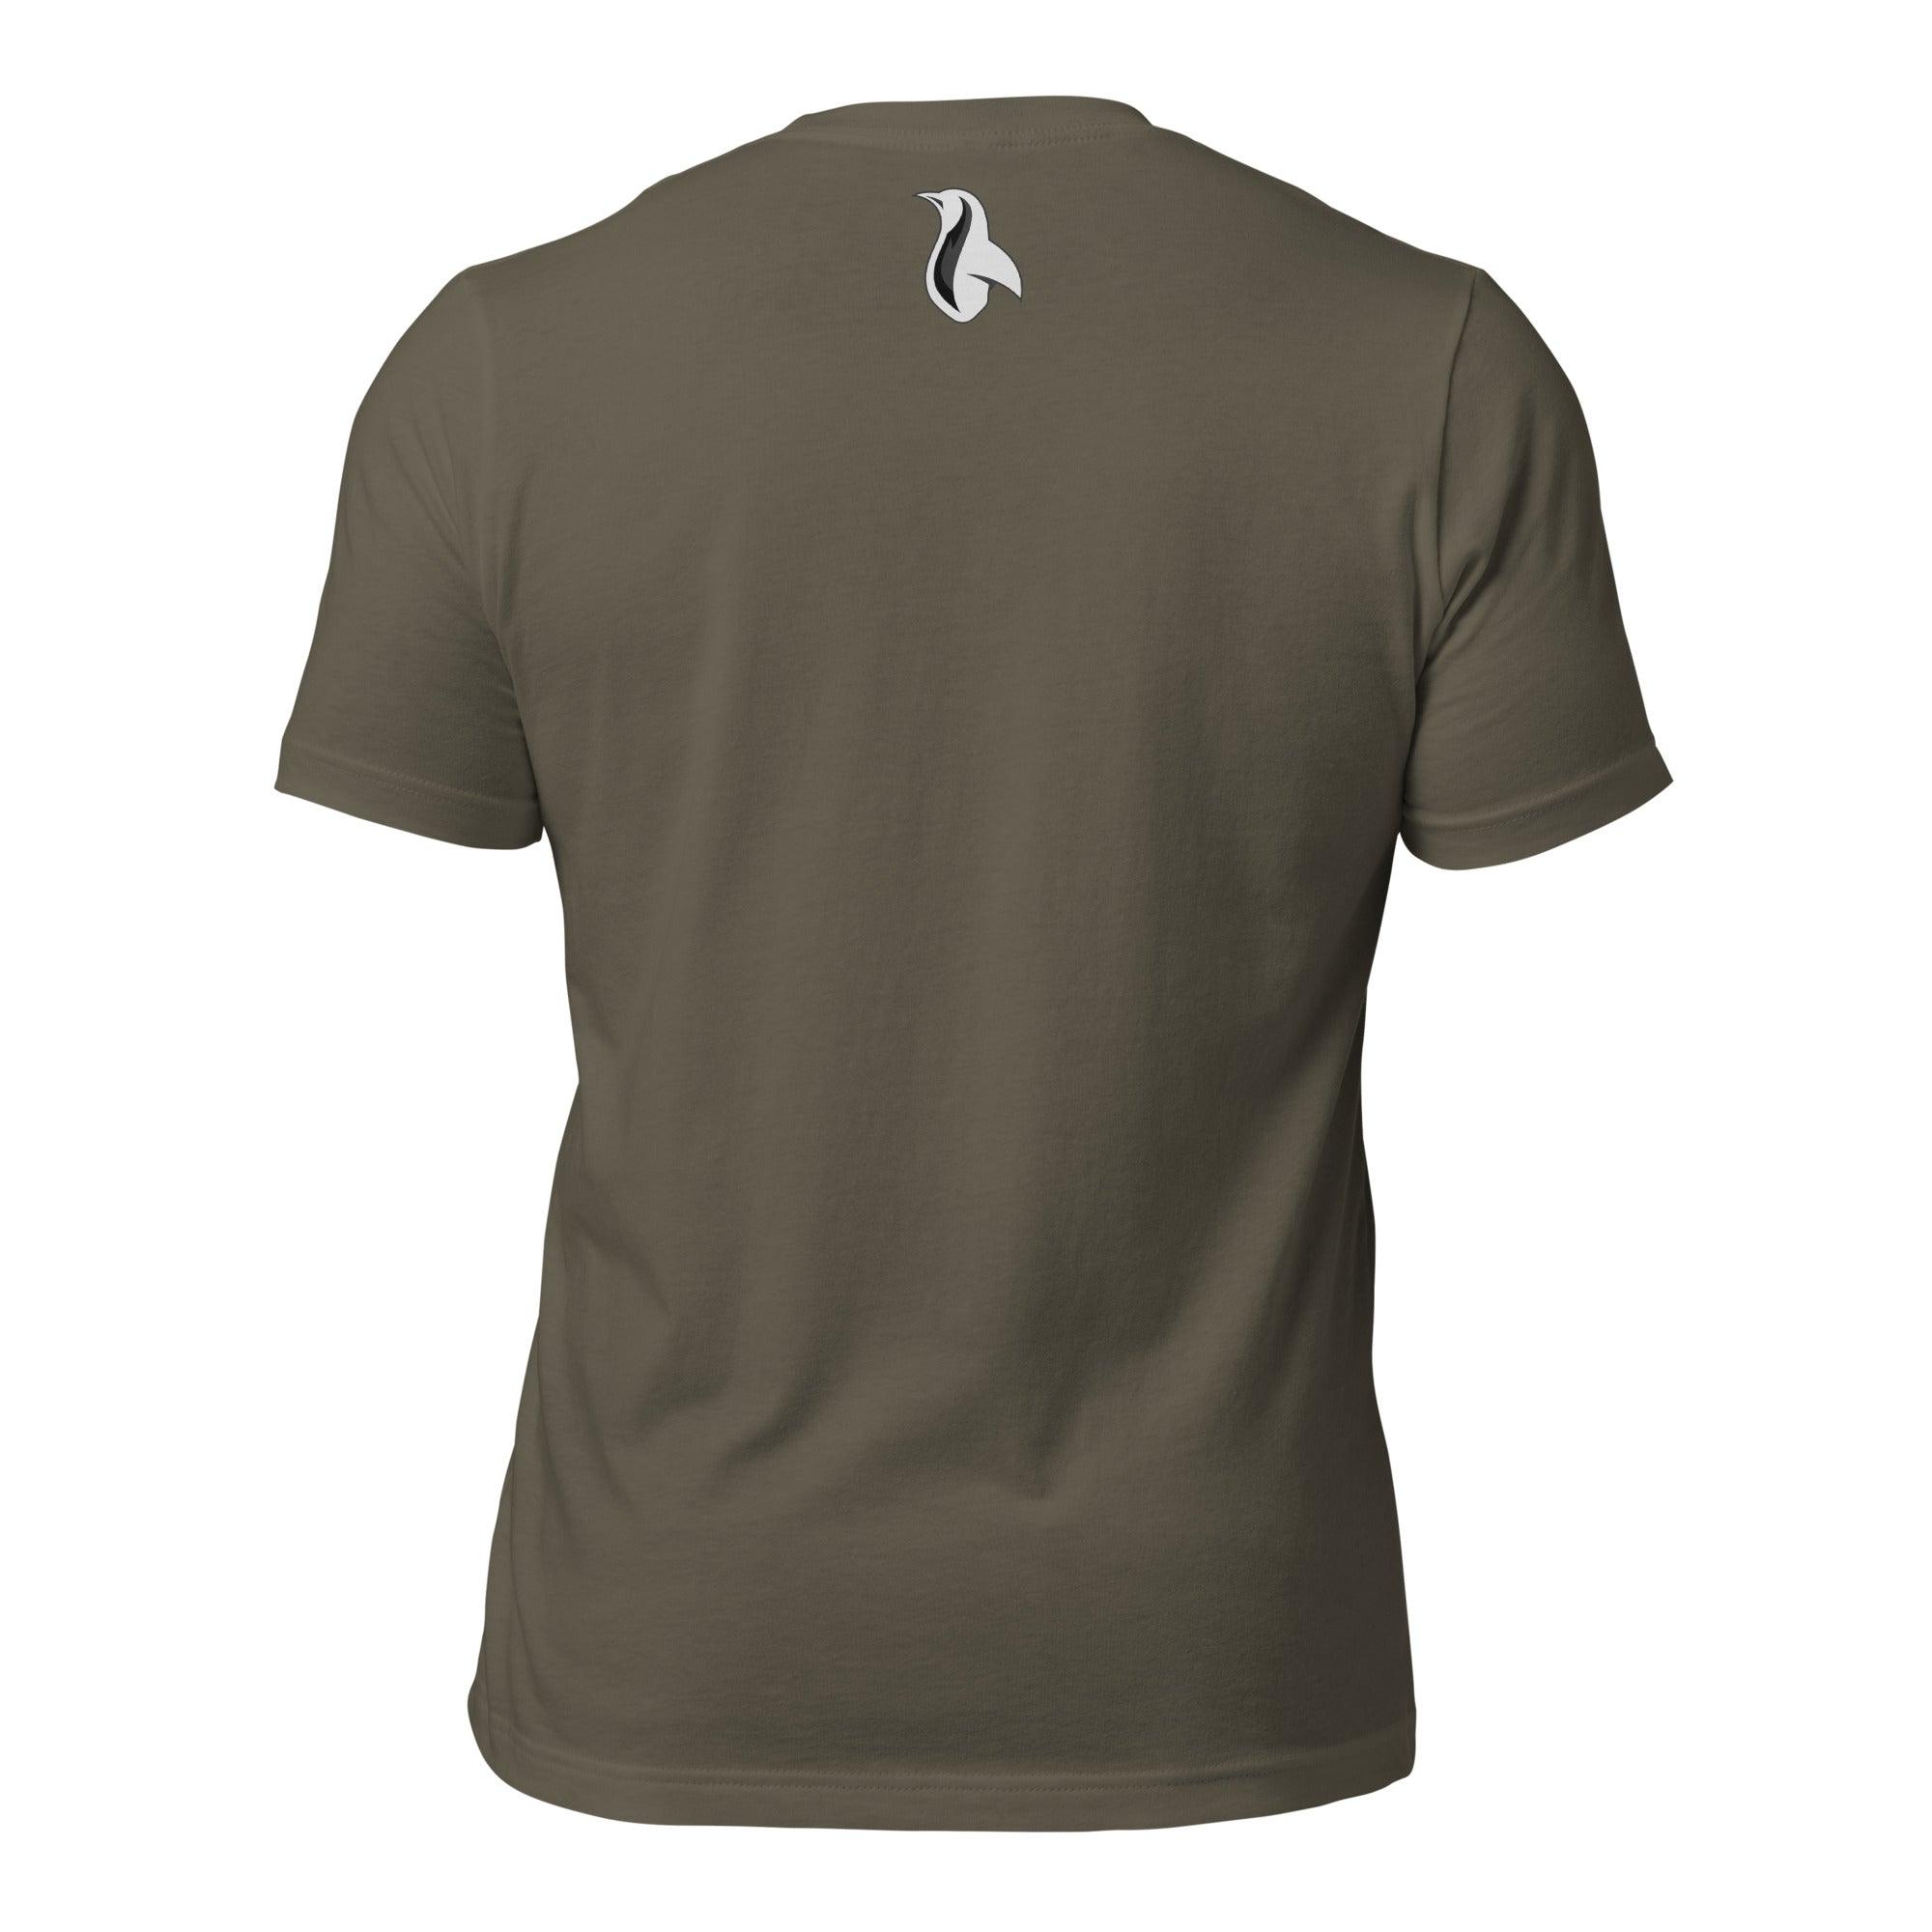 Achtung Baby Unisex t-shirt